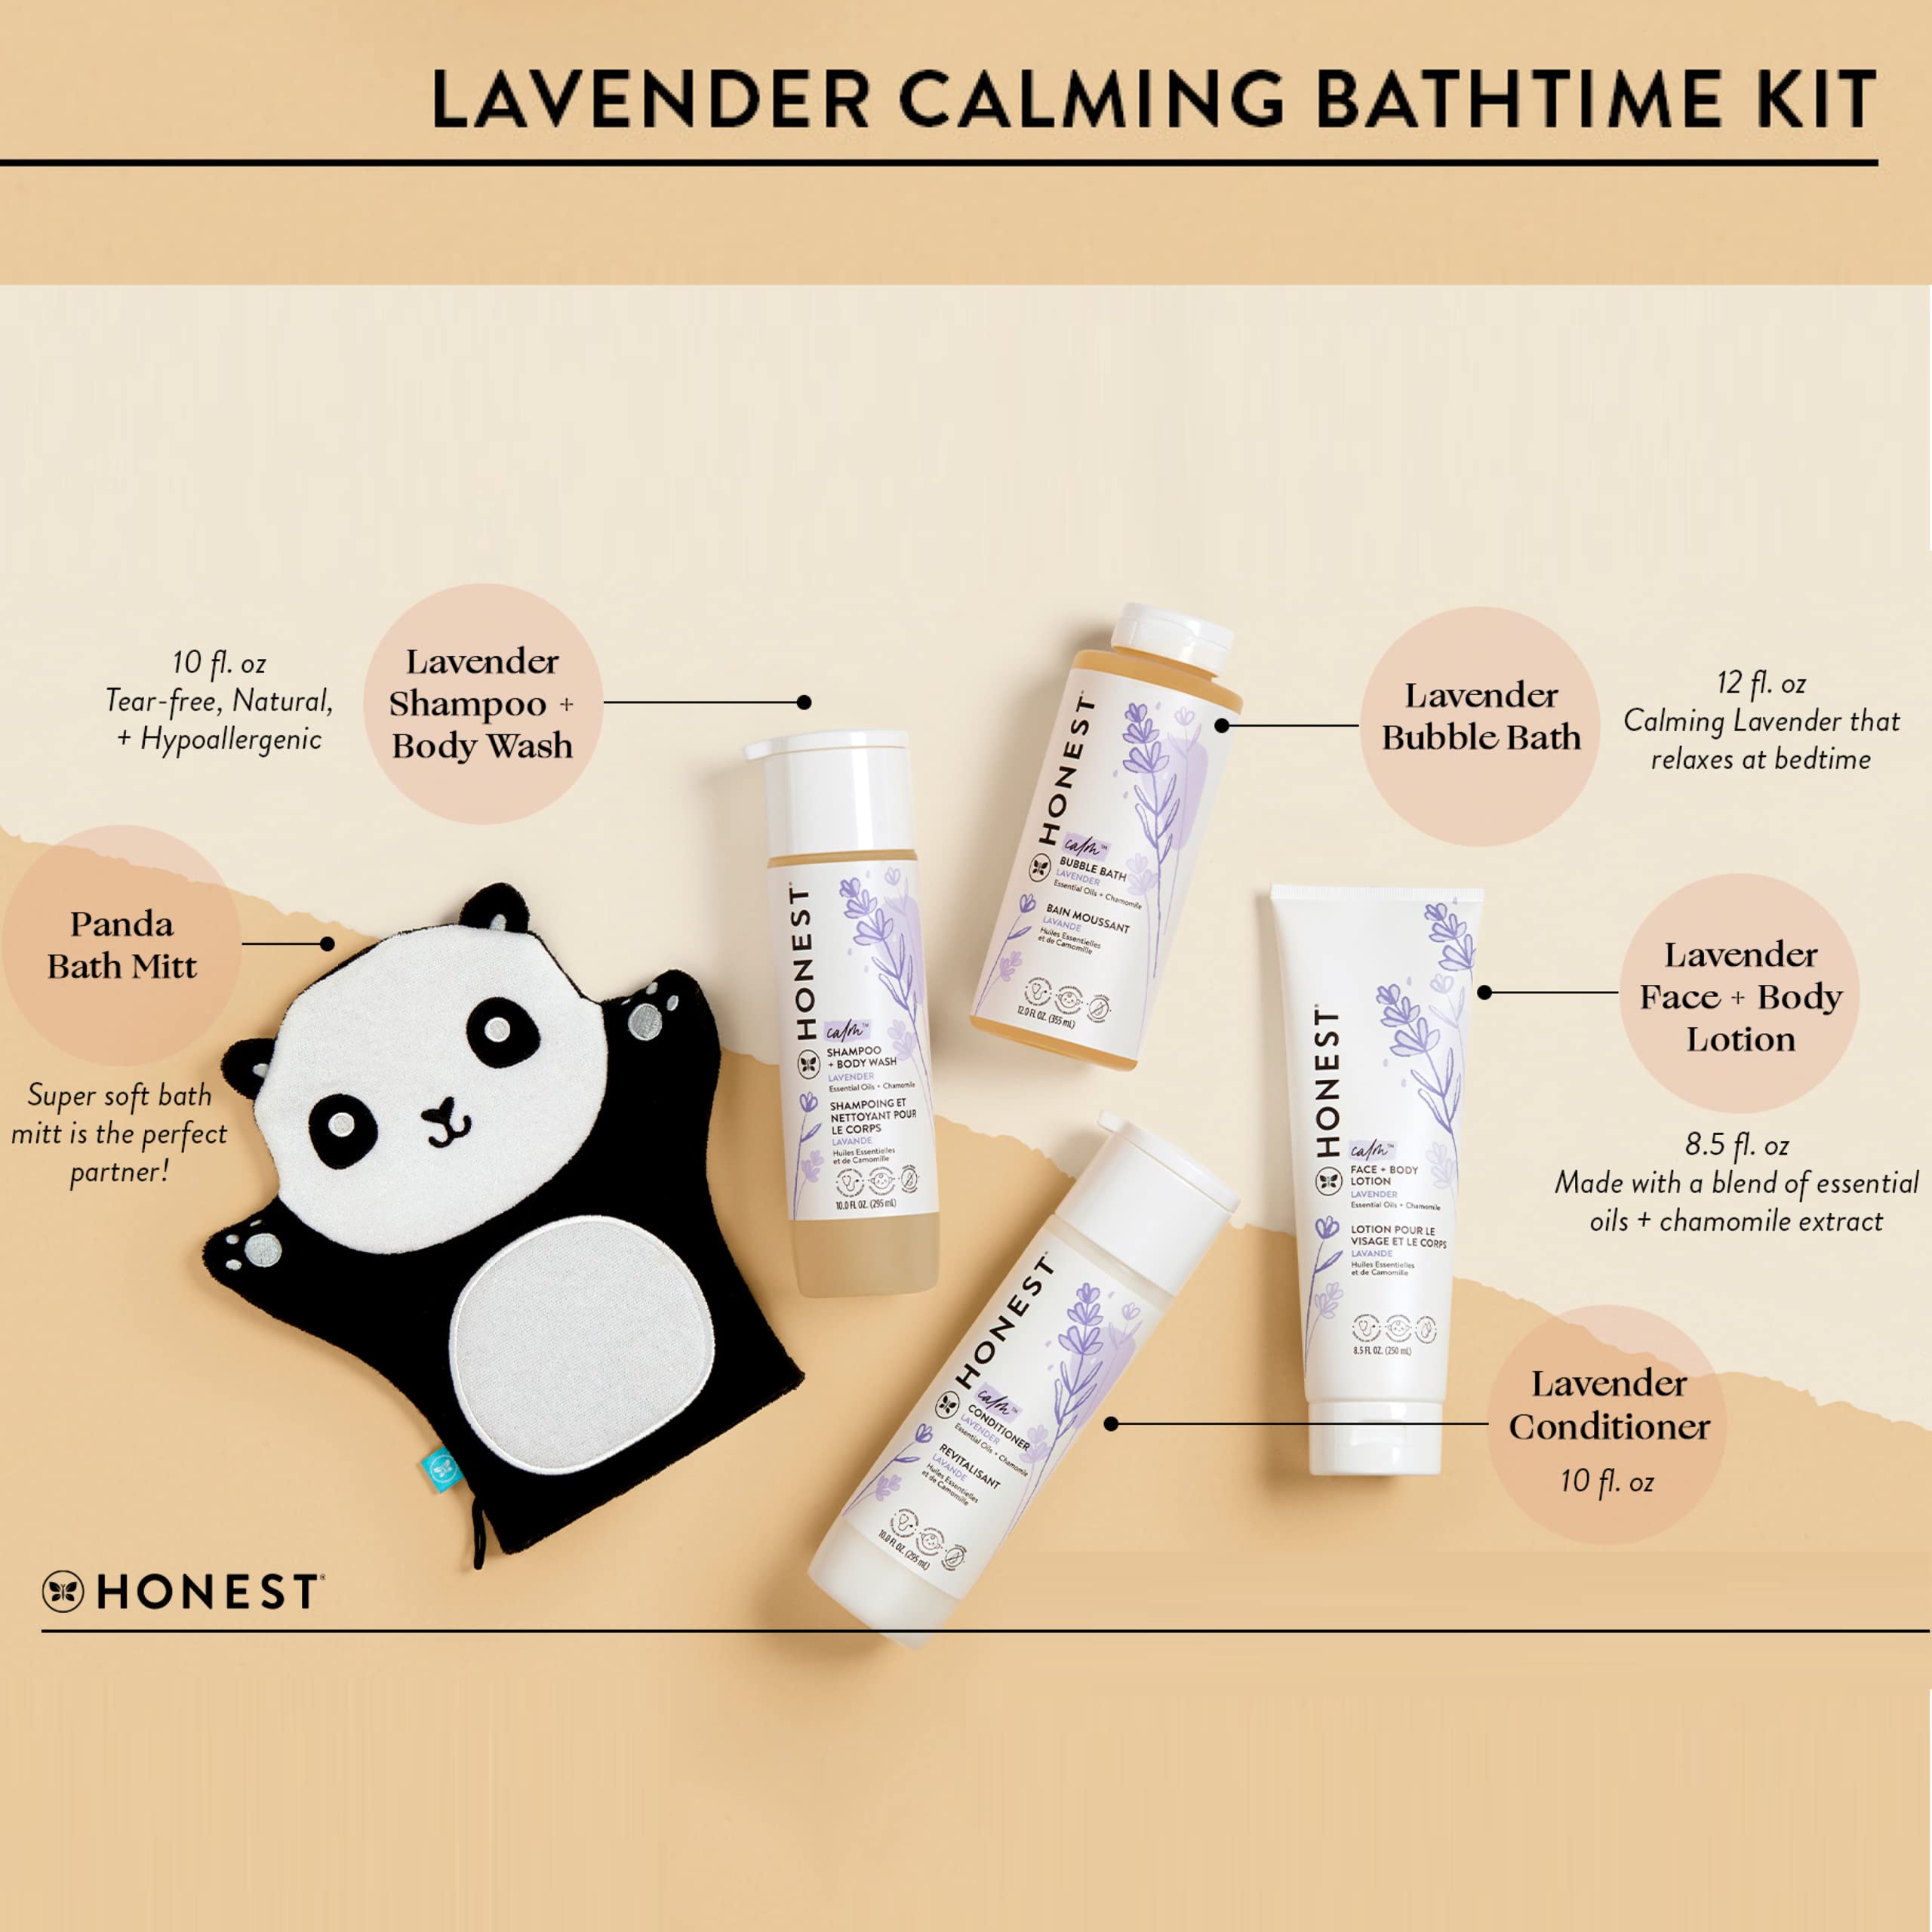 The Honest Company Lavender Bathtime Essentials Bundle | Shampoo + Body Wash, Conditioner, Face + Body Lotion, Bubble Bath, Panda Bath Mitt | Naturally Derived, Tear-free, Hypoallergenic